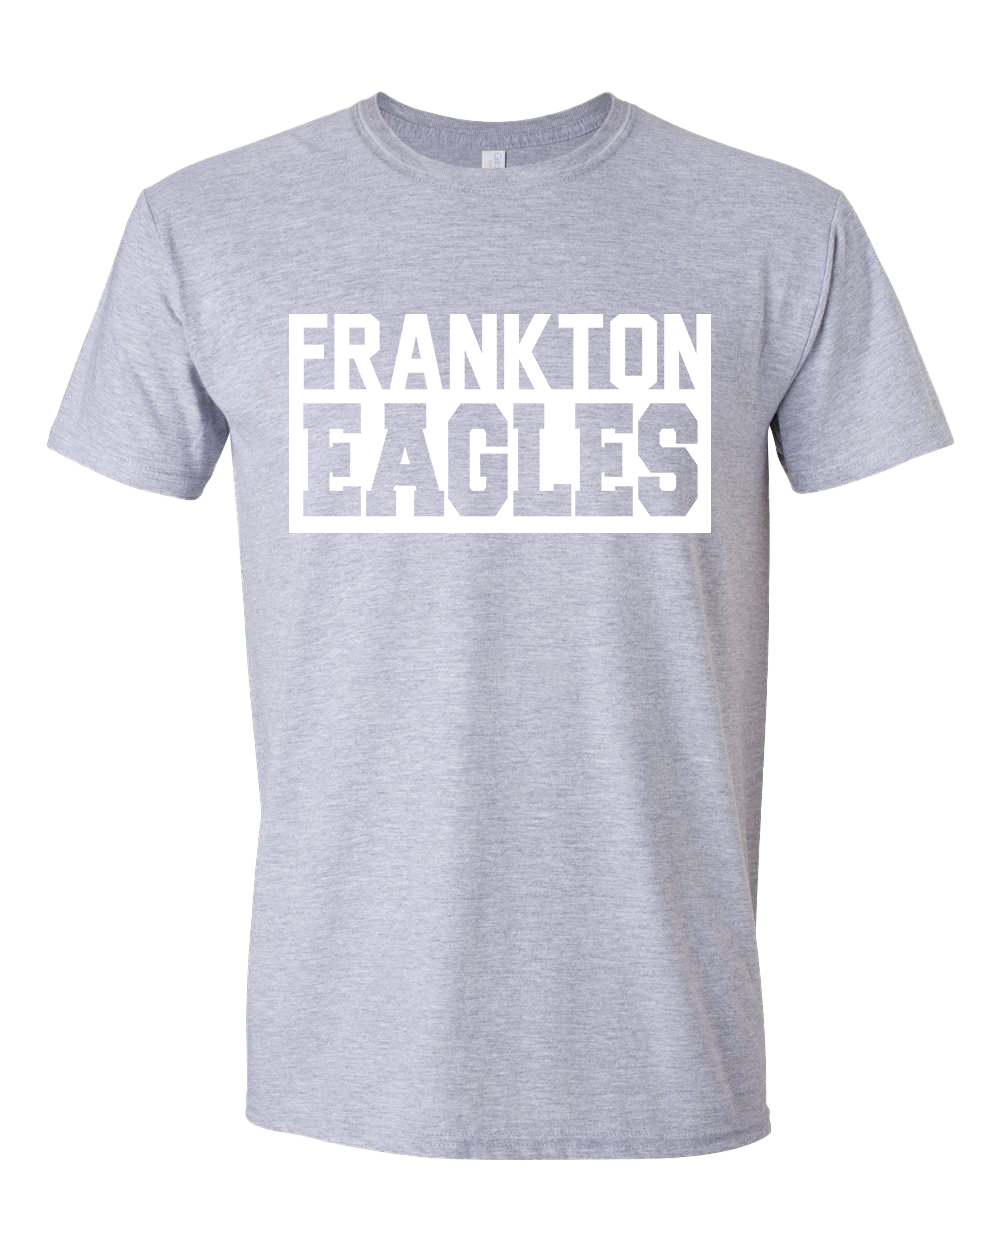 Frankton Eagles Block Tshirt - Sport Grey